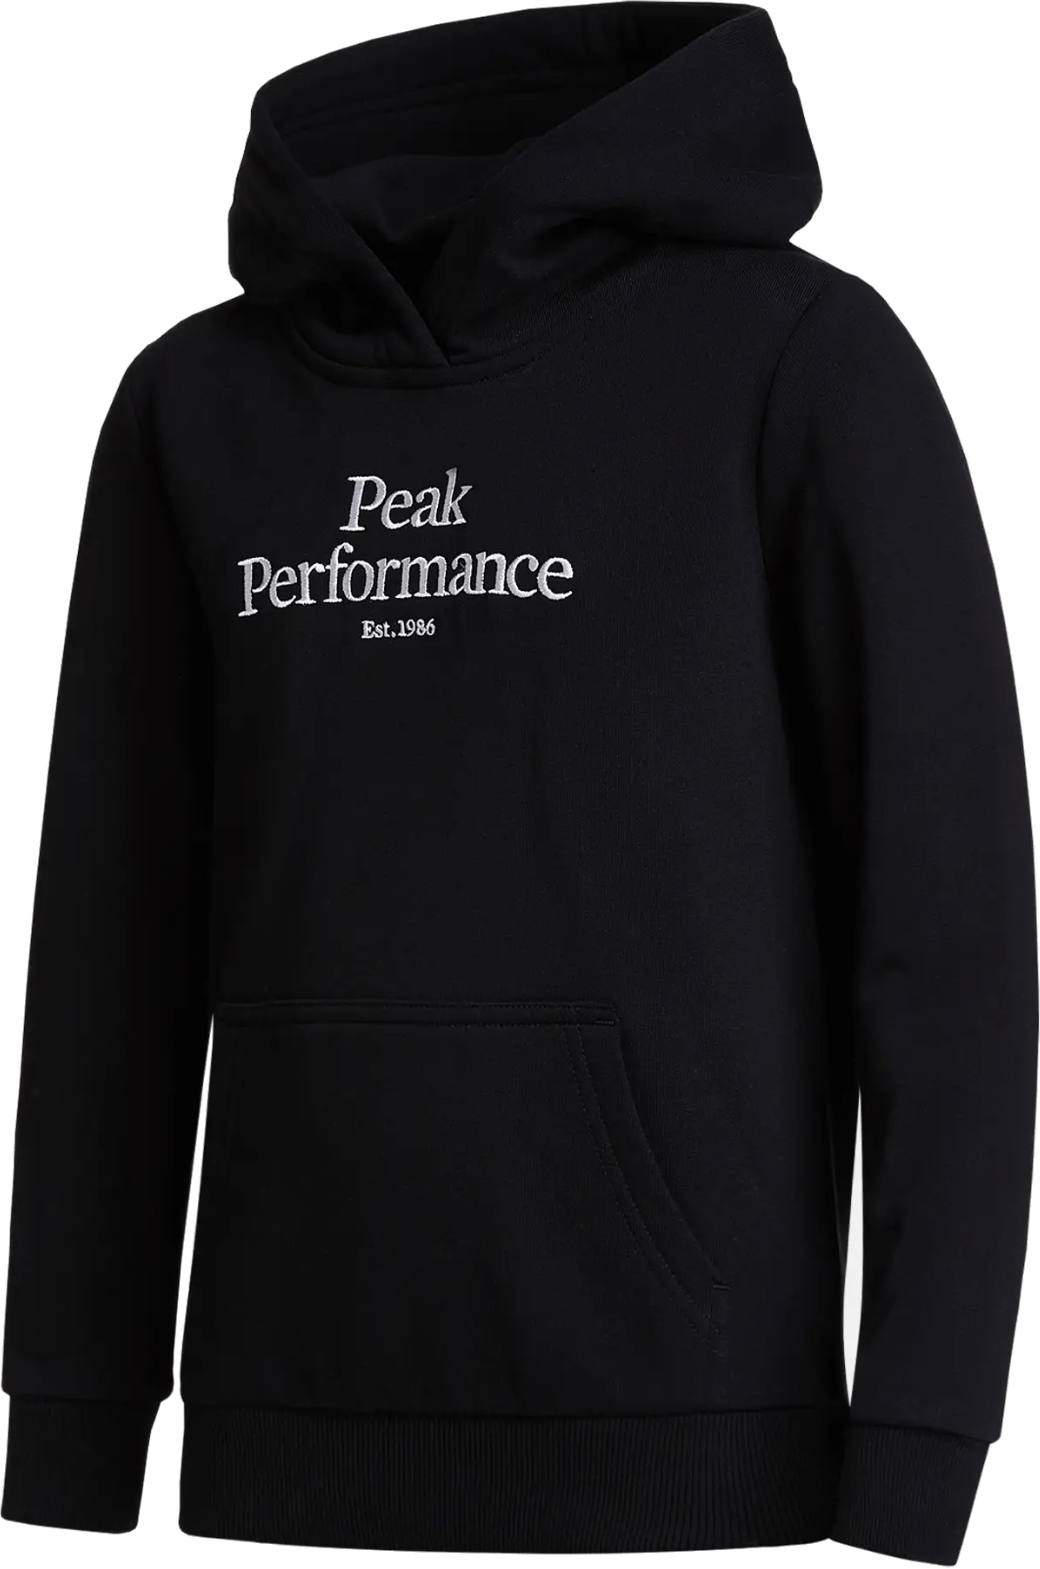 Peak Performance Jr Original Hood Black 140